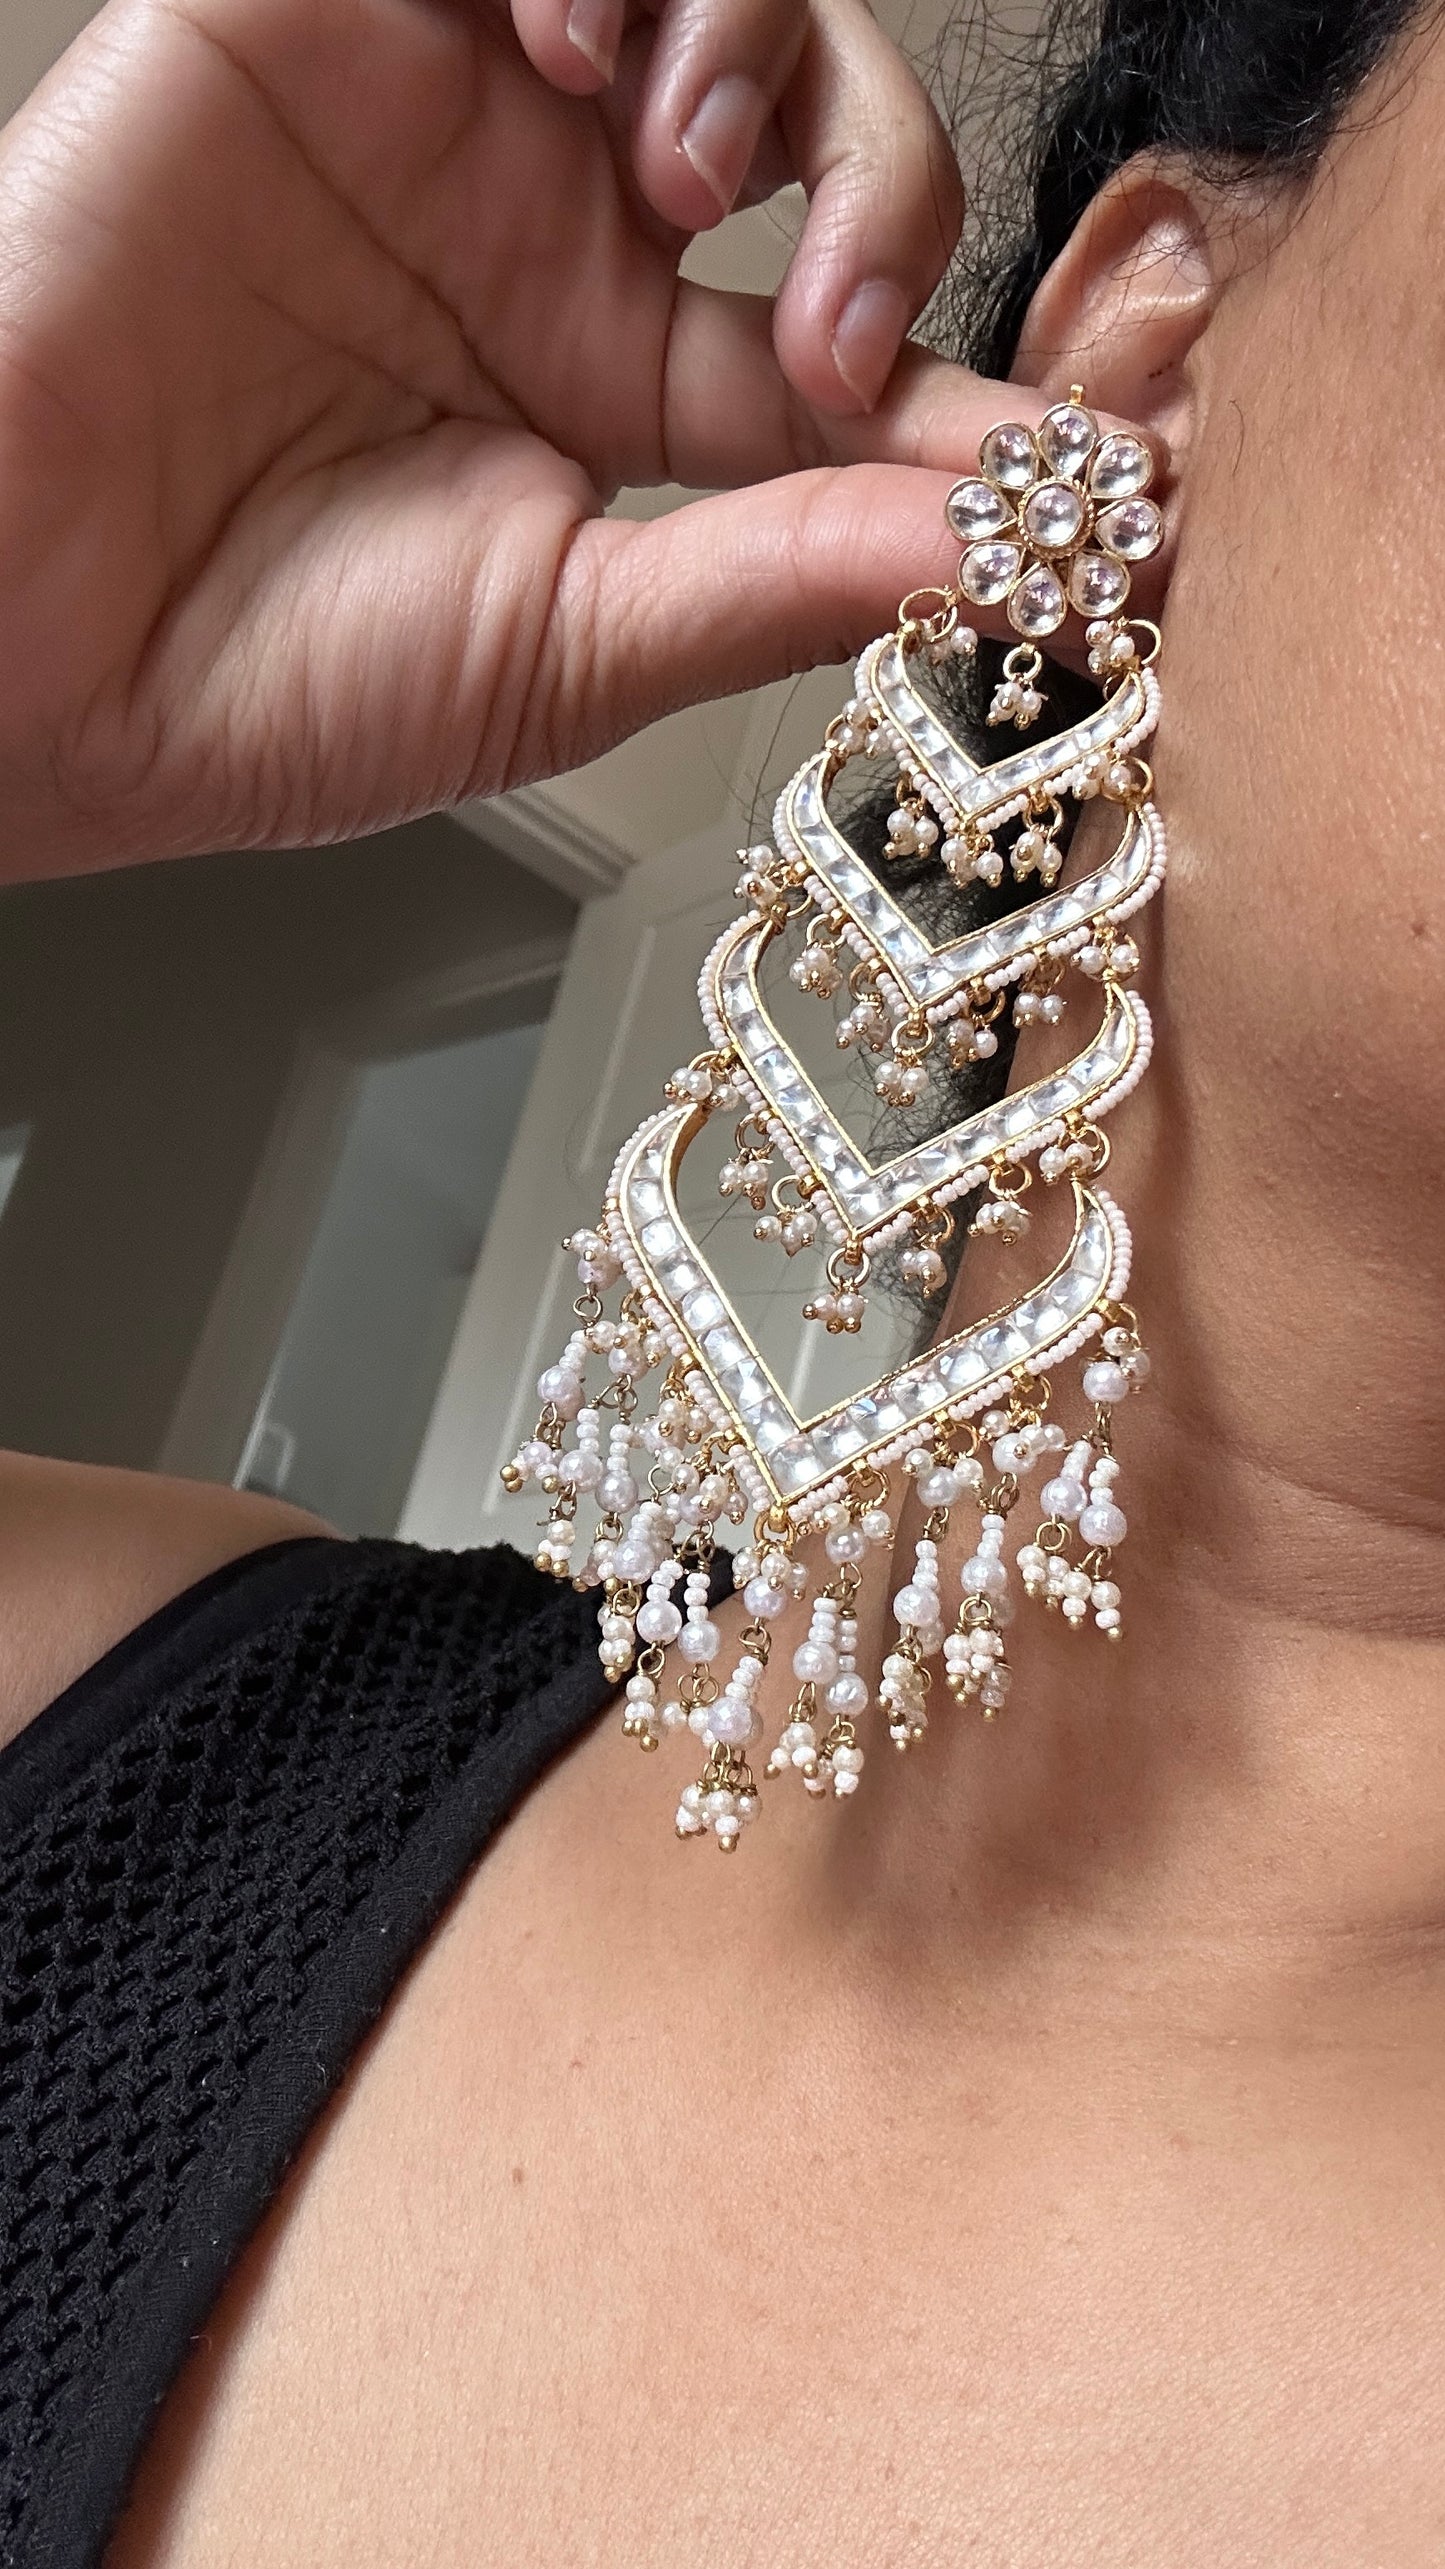 Pachi kundan earrings